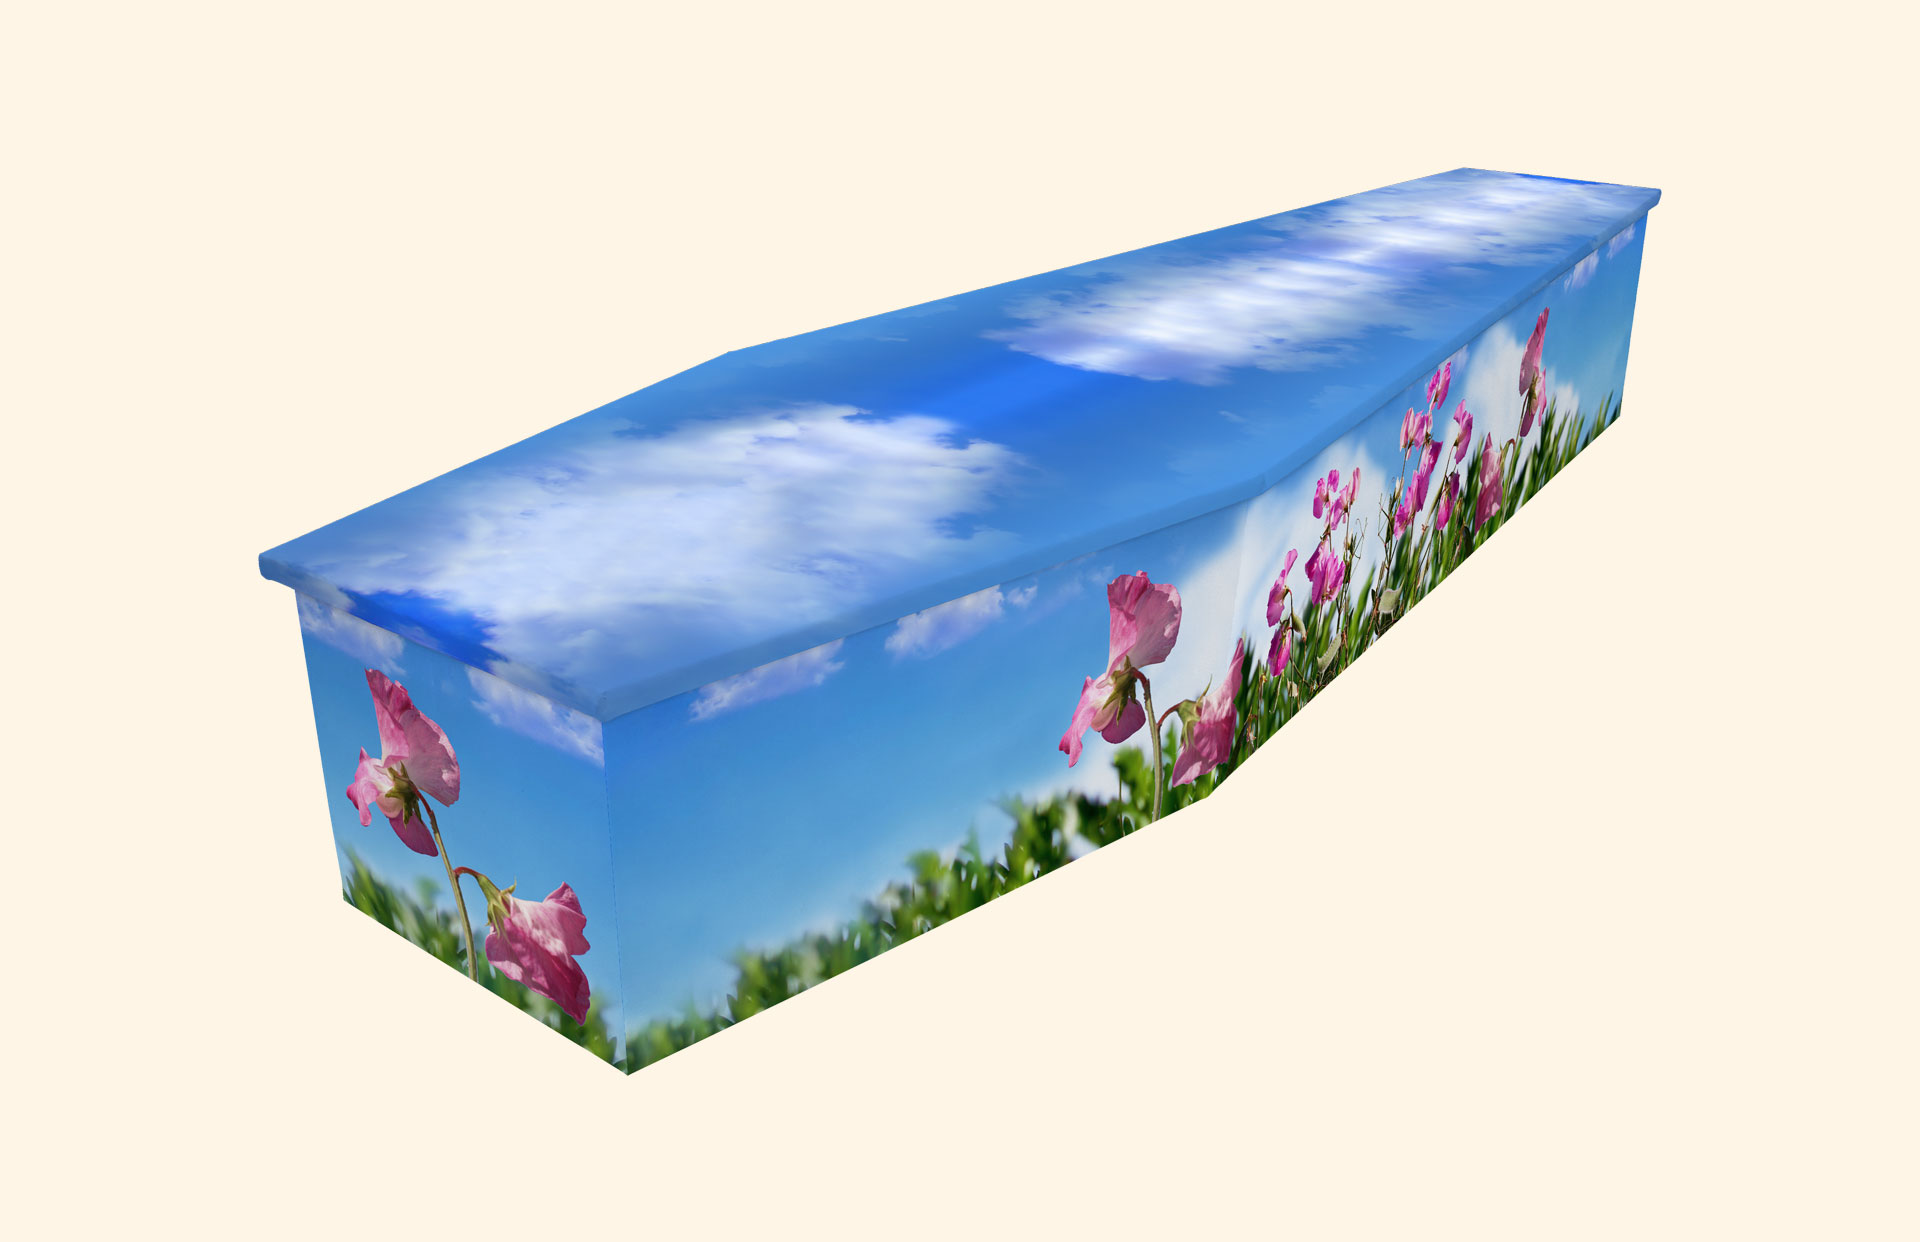 Sweet Peas design on a cardboard coffin